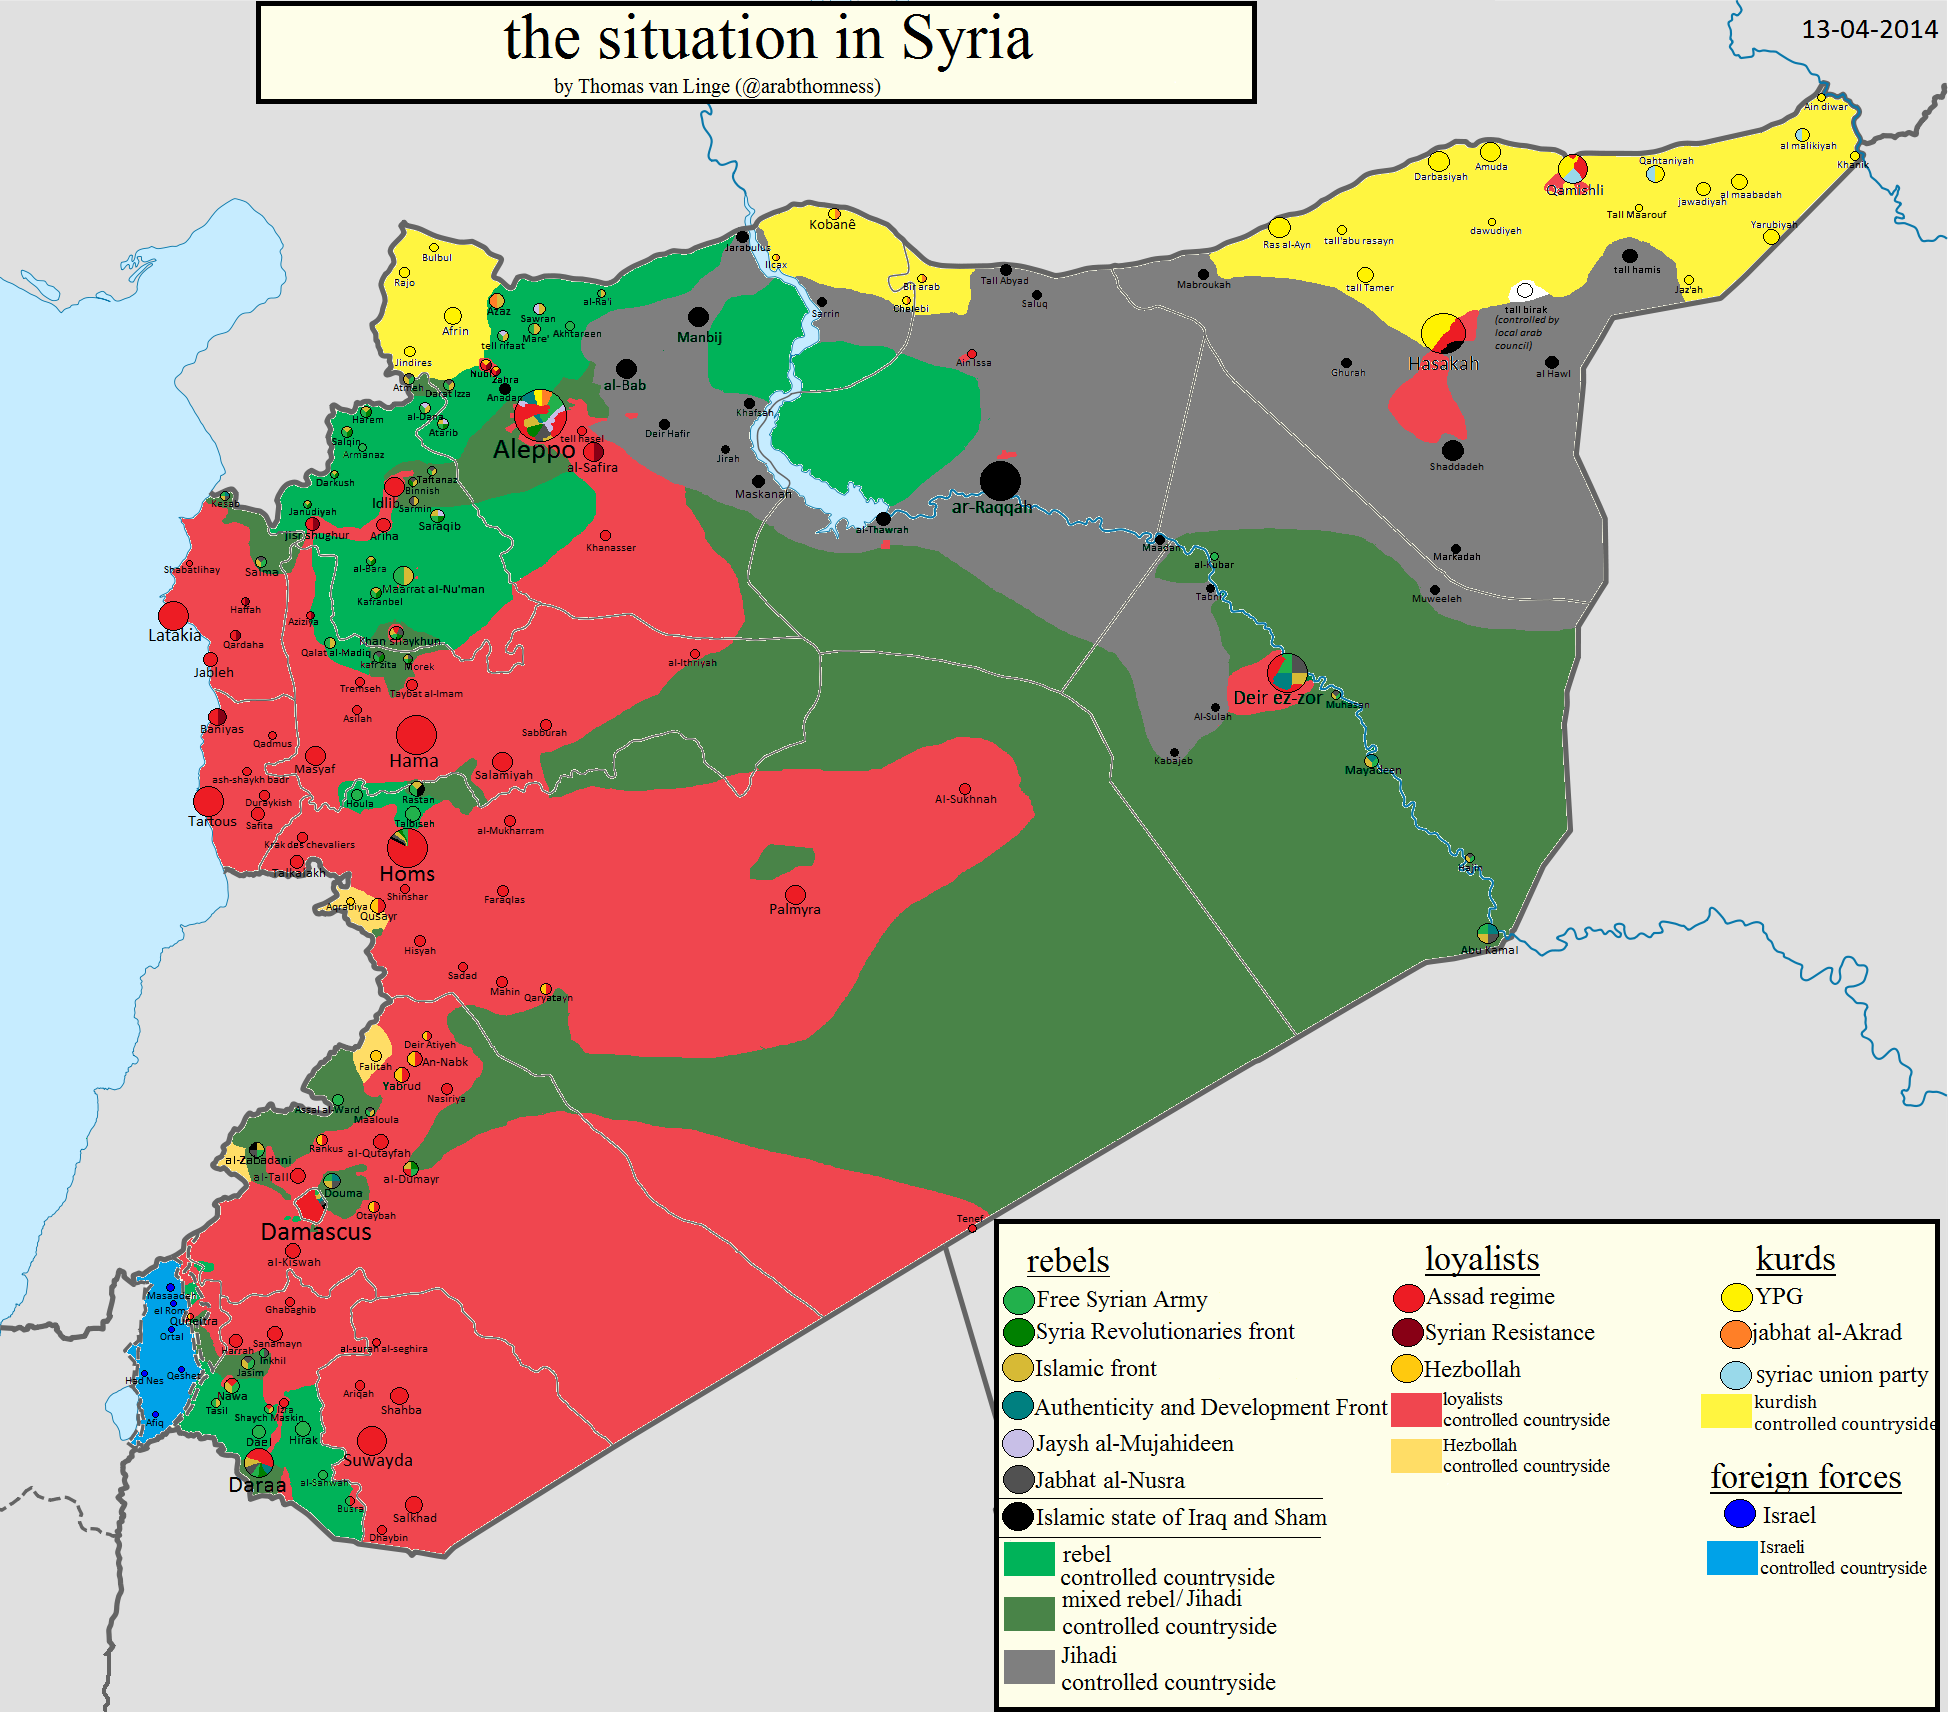 http://www.les-crises.fr/wp-content/uploads/2015/10/22-syrie-04-2014.png